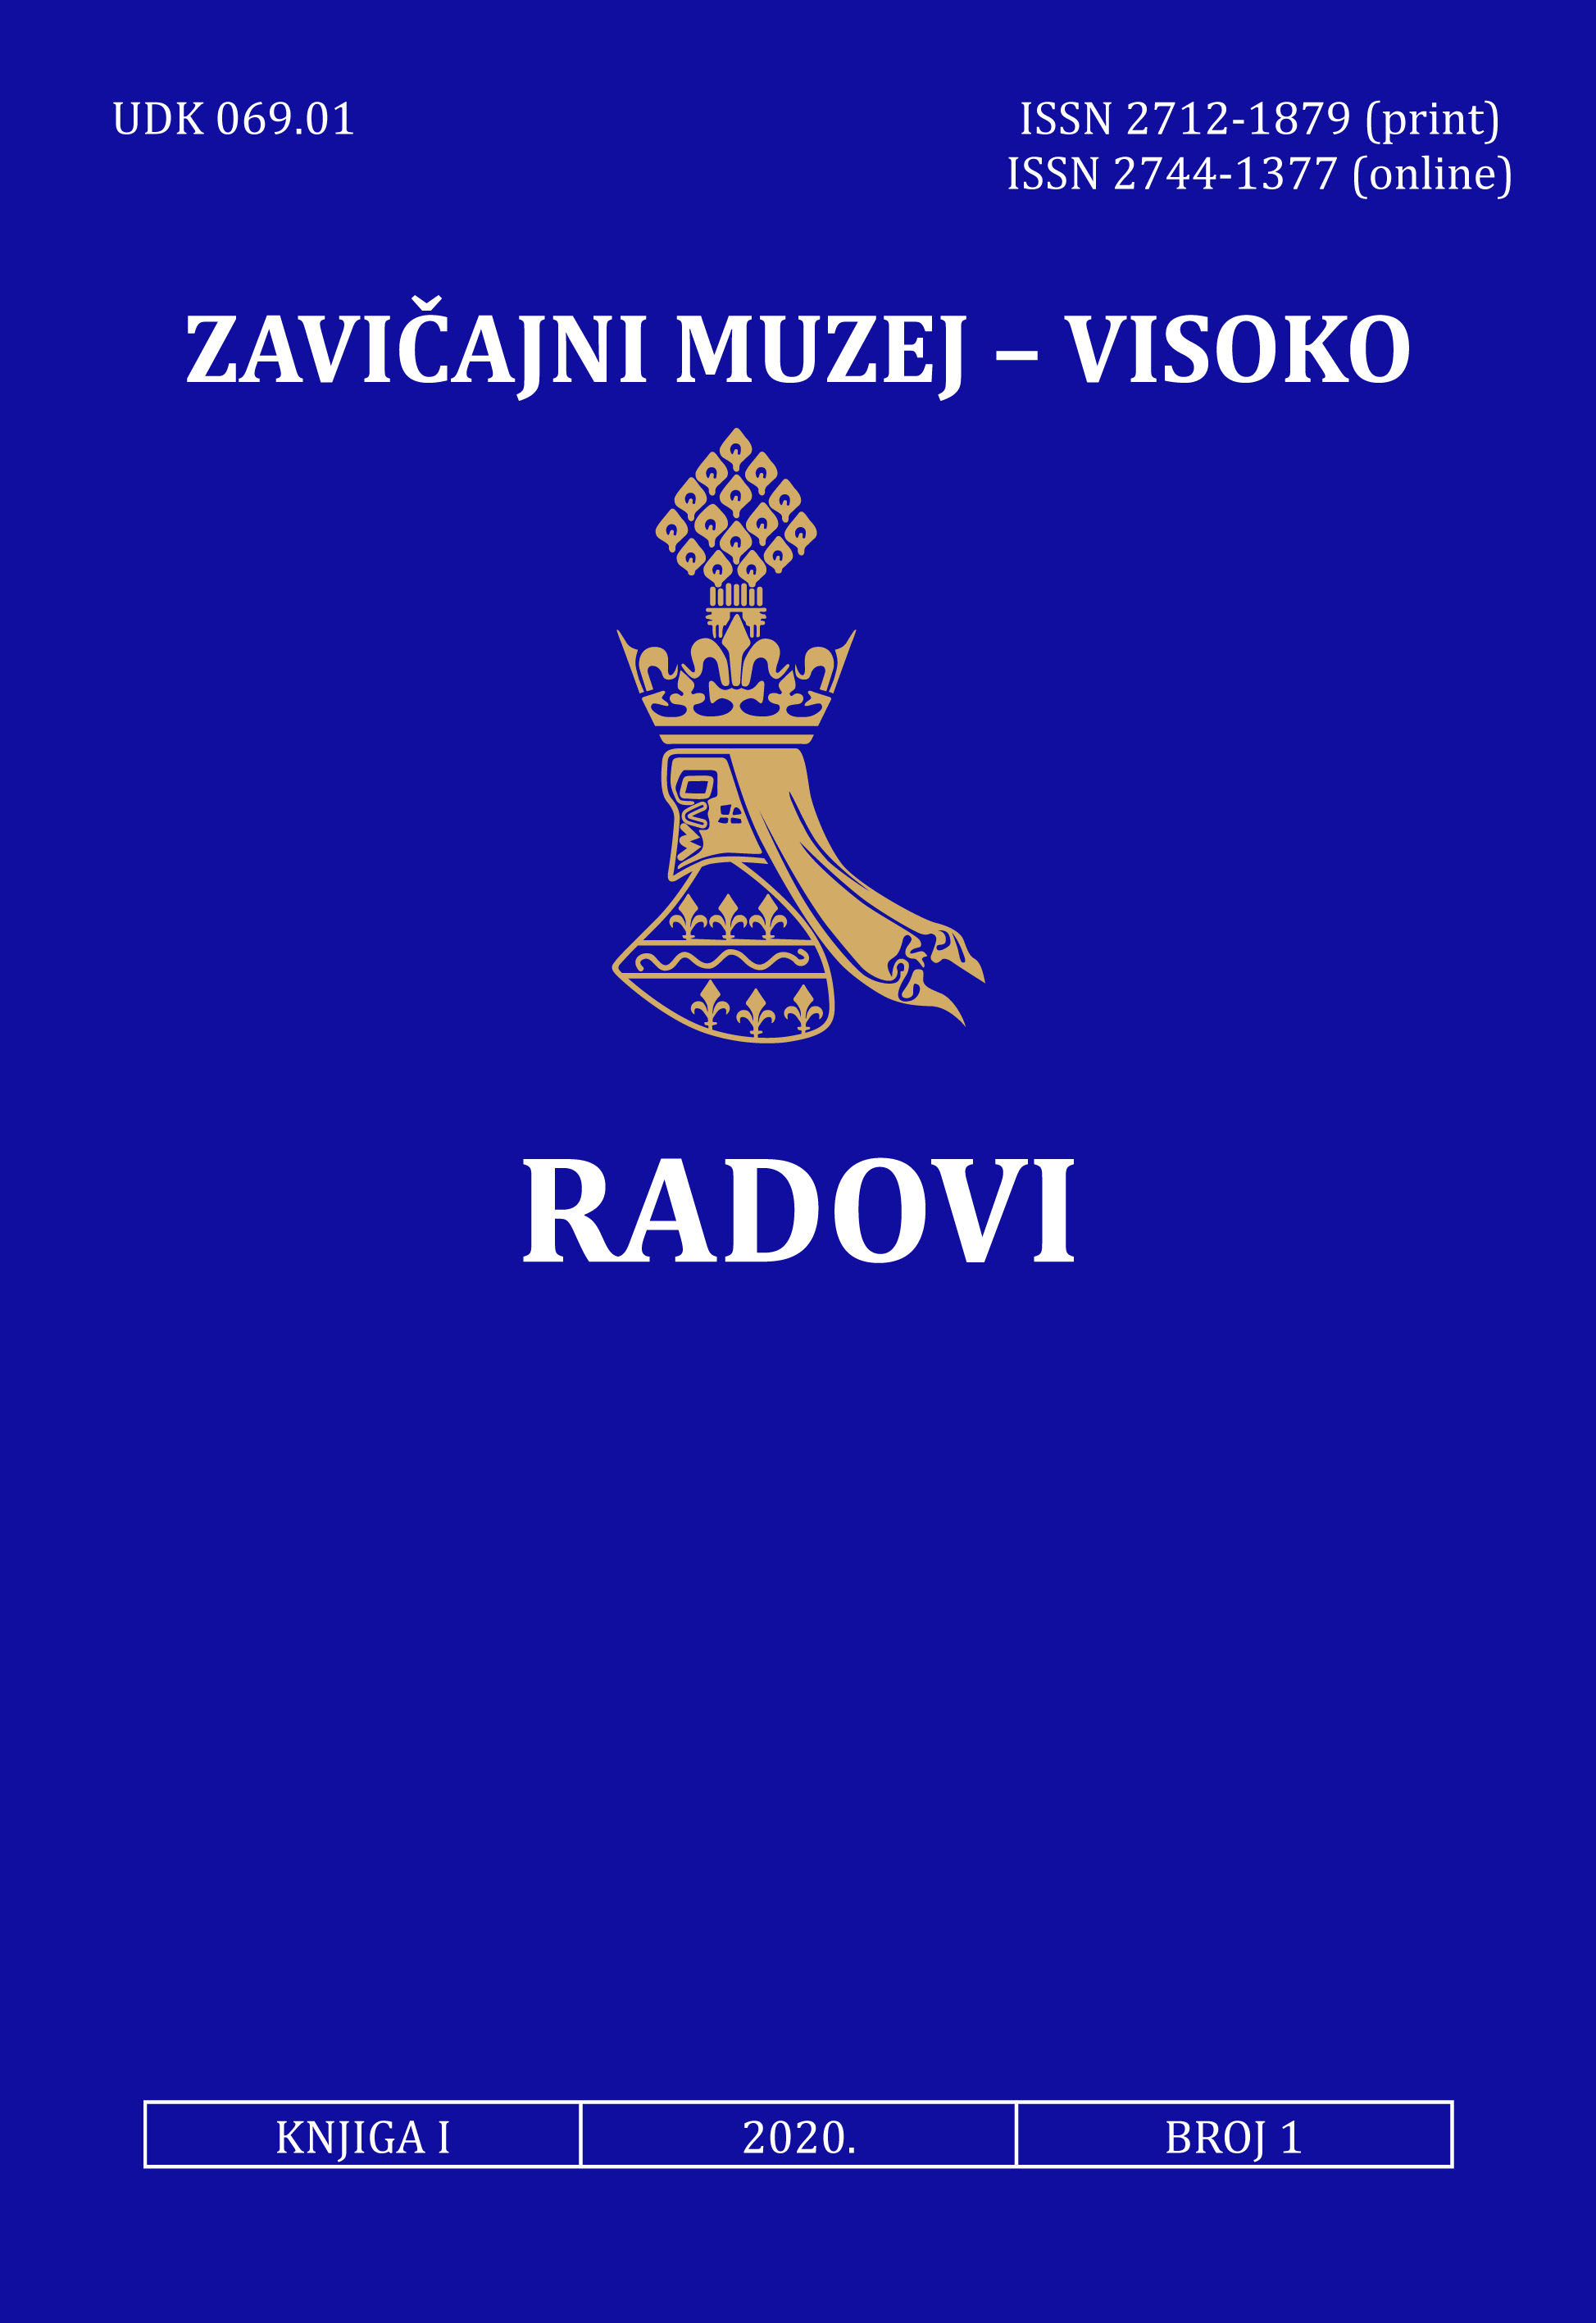 Jews of Visoko Cover Image